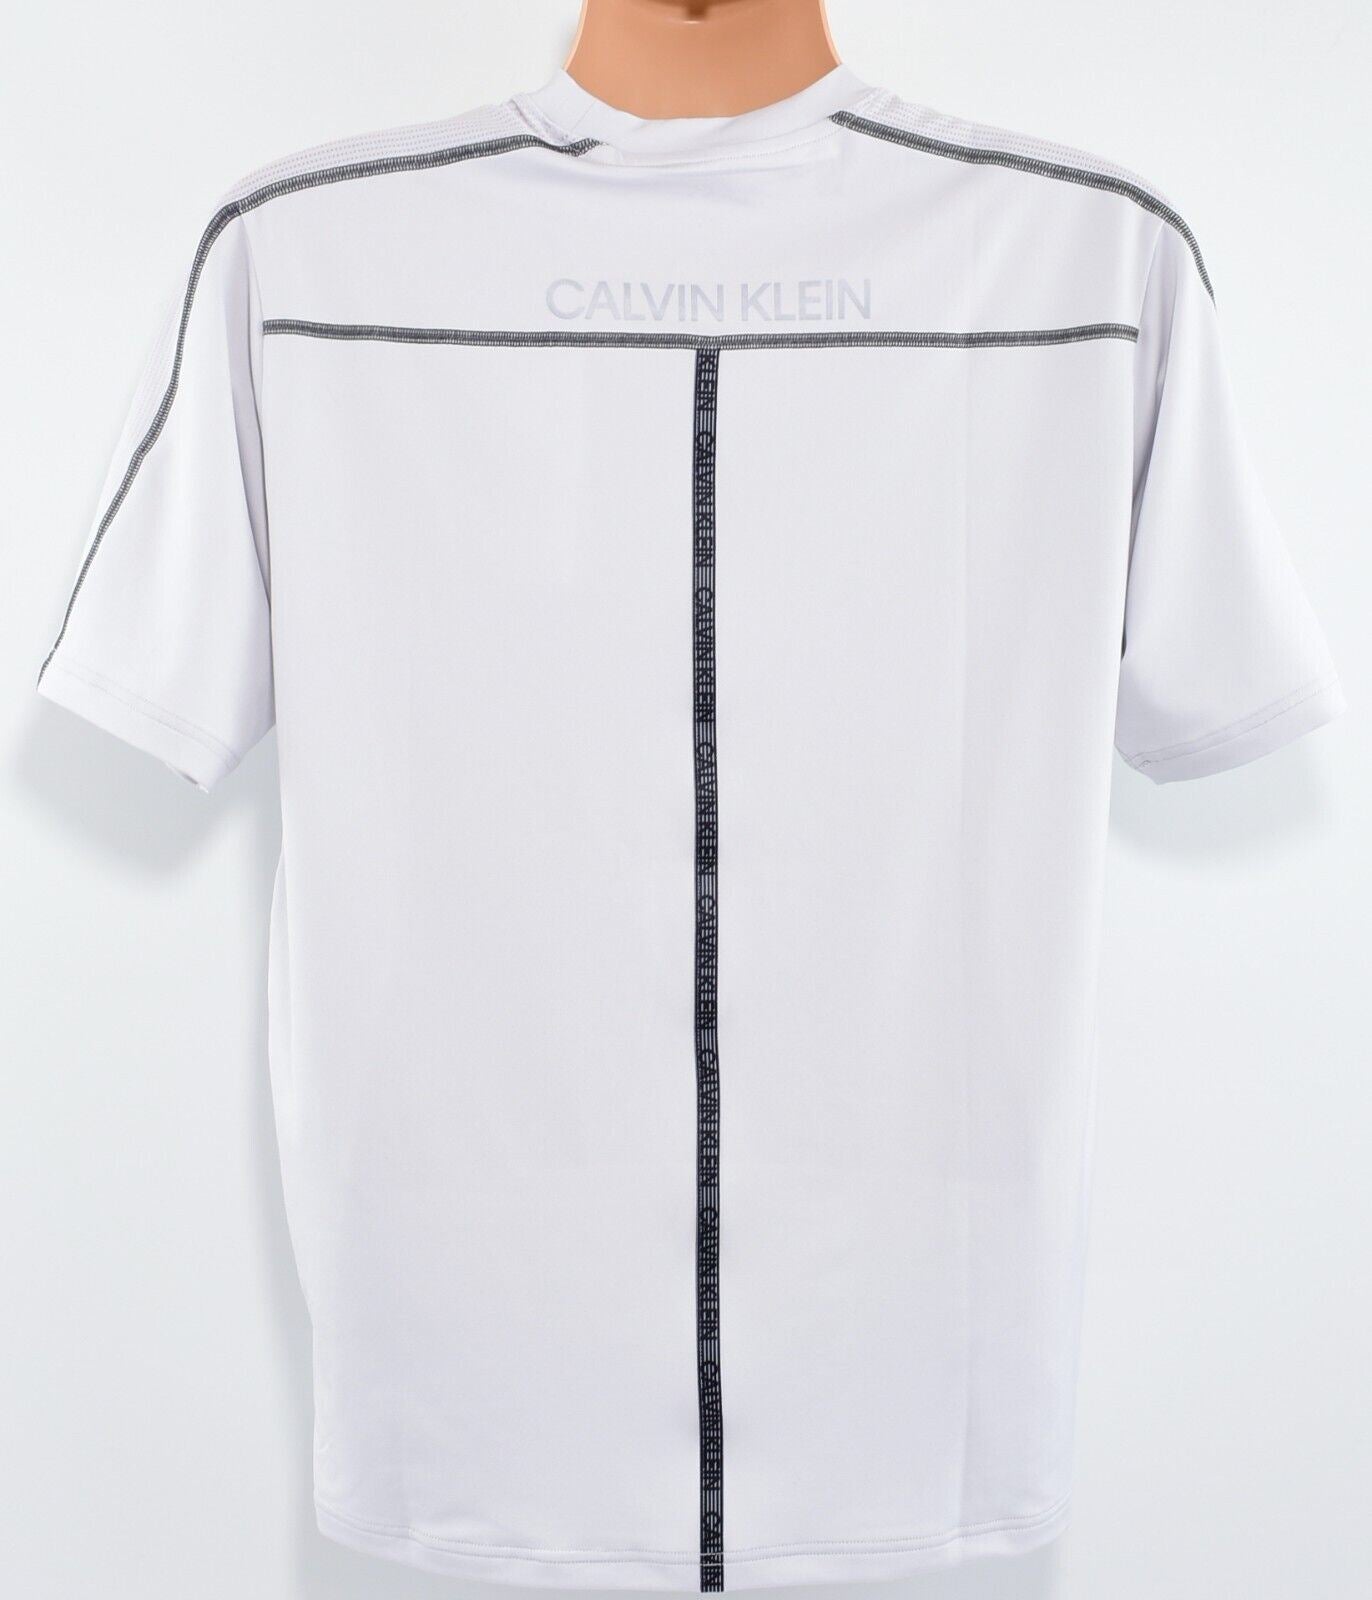 CALVIN KLEIN Performance Icon Men's Short Sleeve T-shirt, Stone Grey, size M